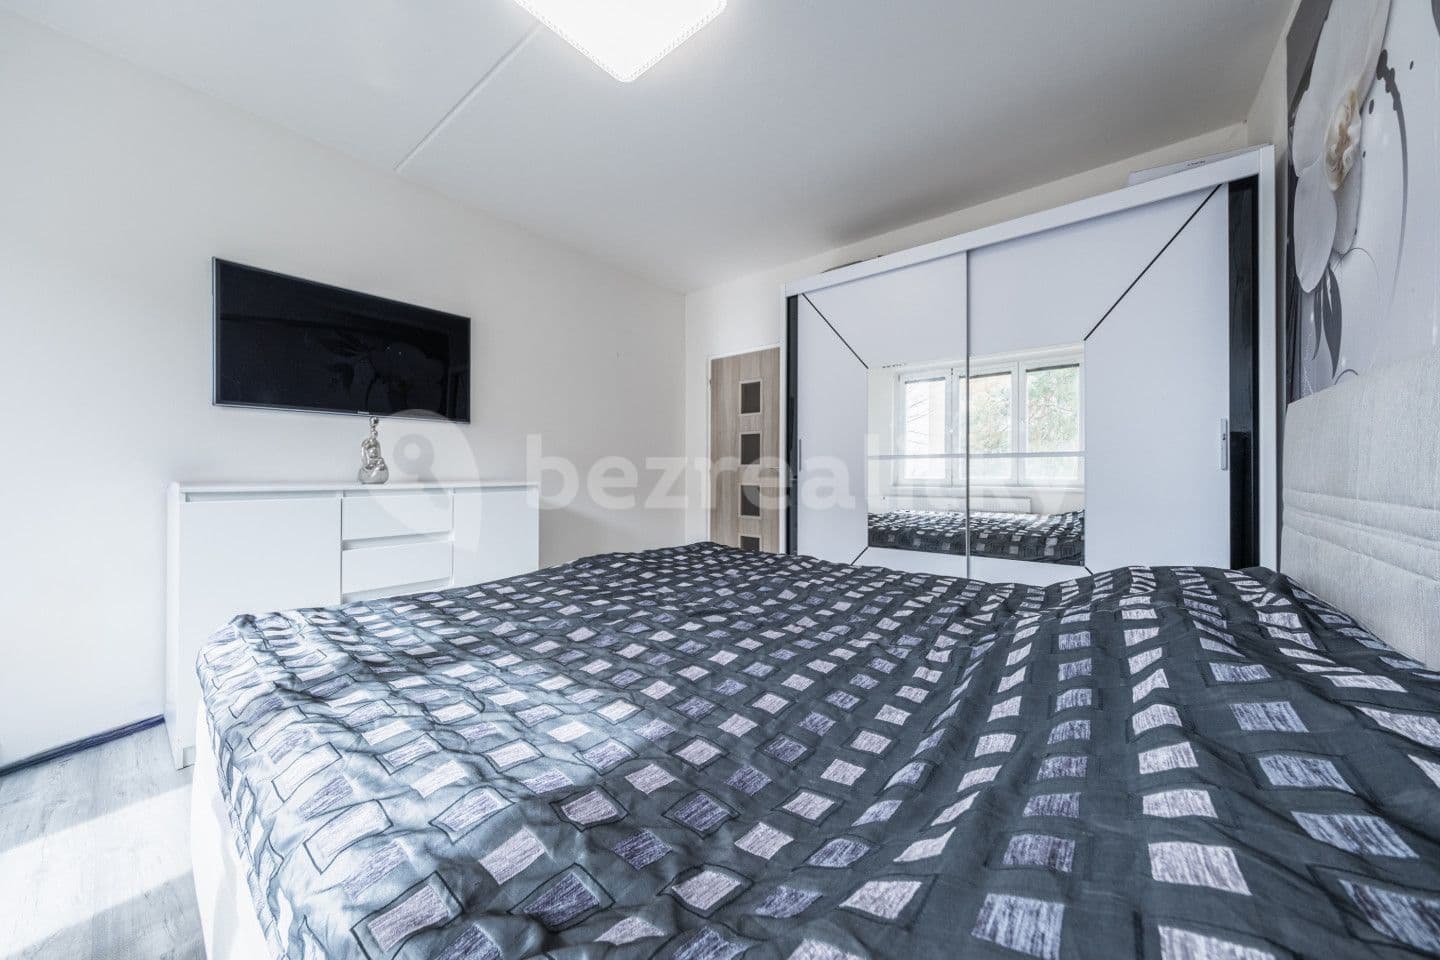 4 bedroom flat for sale, 79 m², Kamenná, Chomutov, Ústecký Region